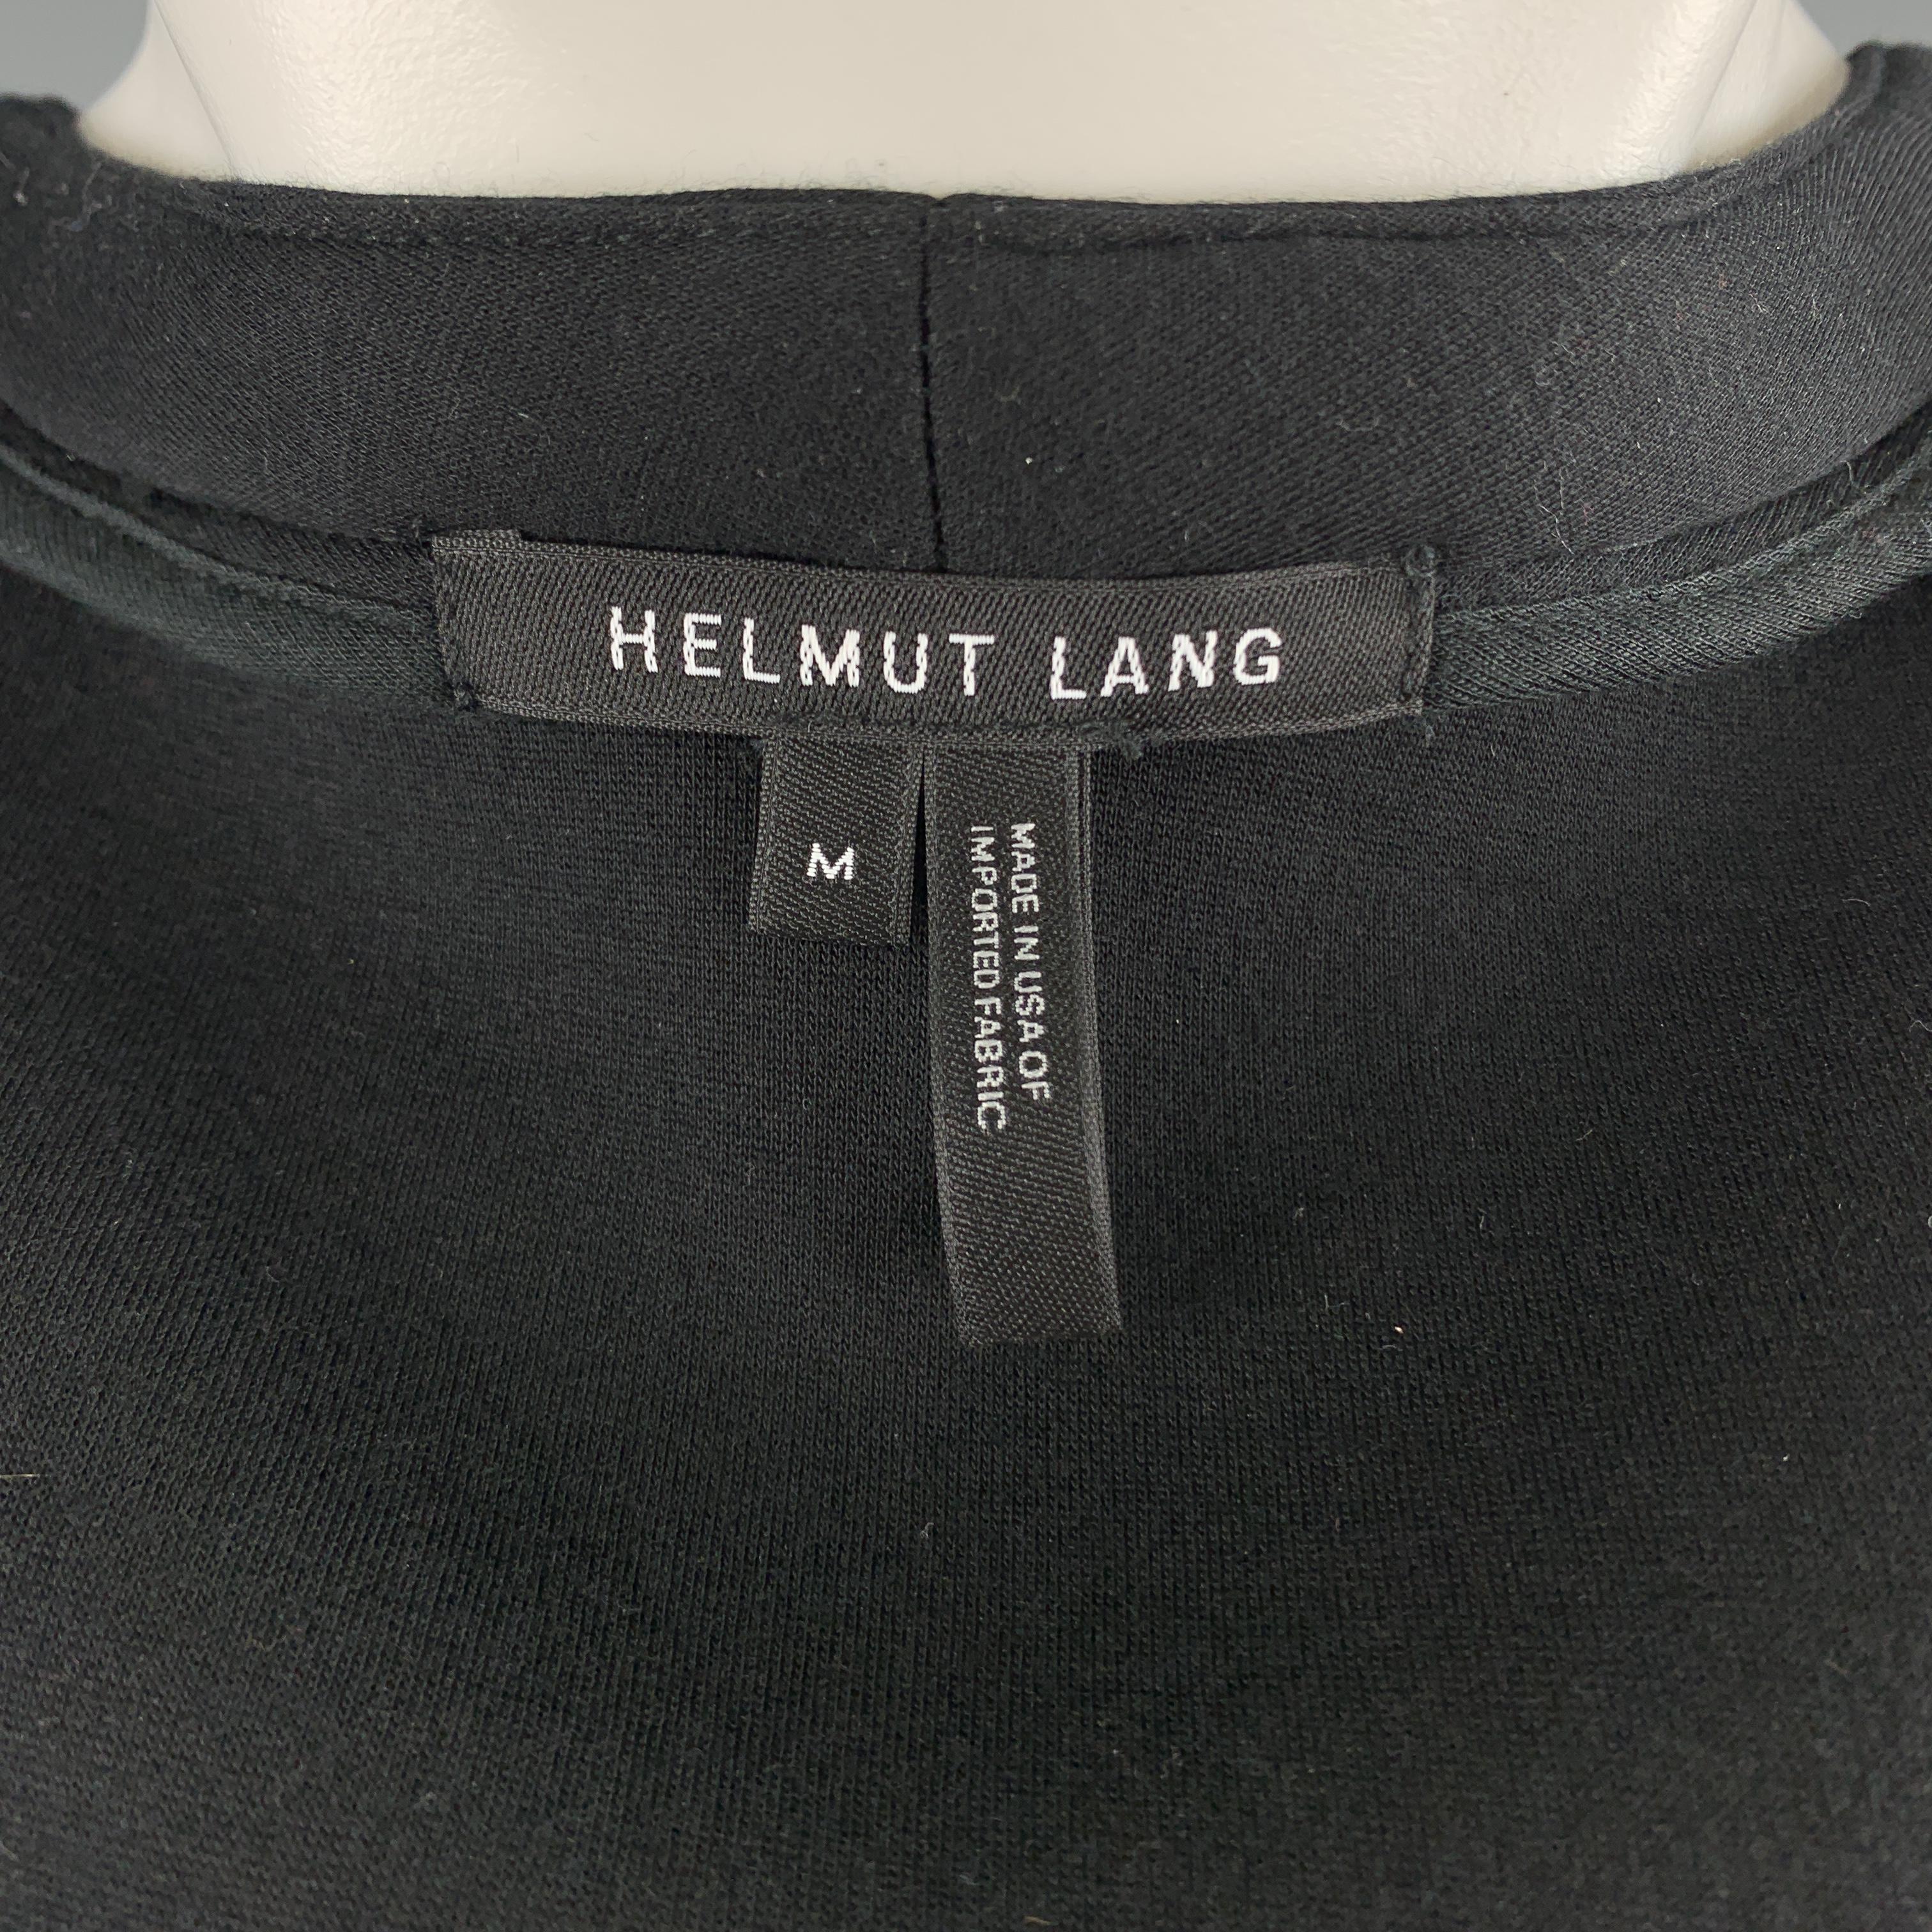 HELMUT LANG Size M Black Jersey Tactical Bondage Strap Vest 2